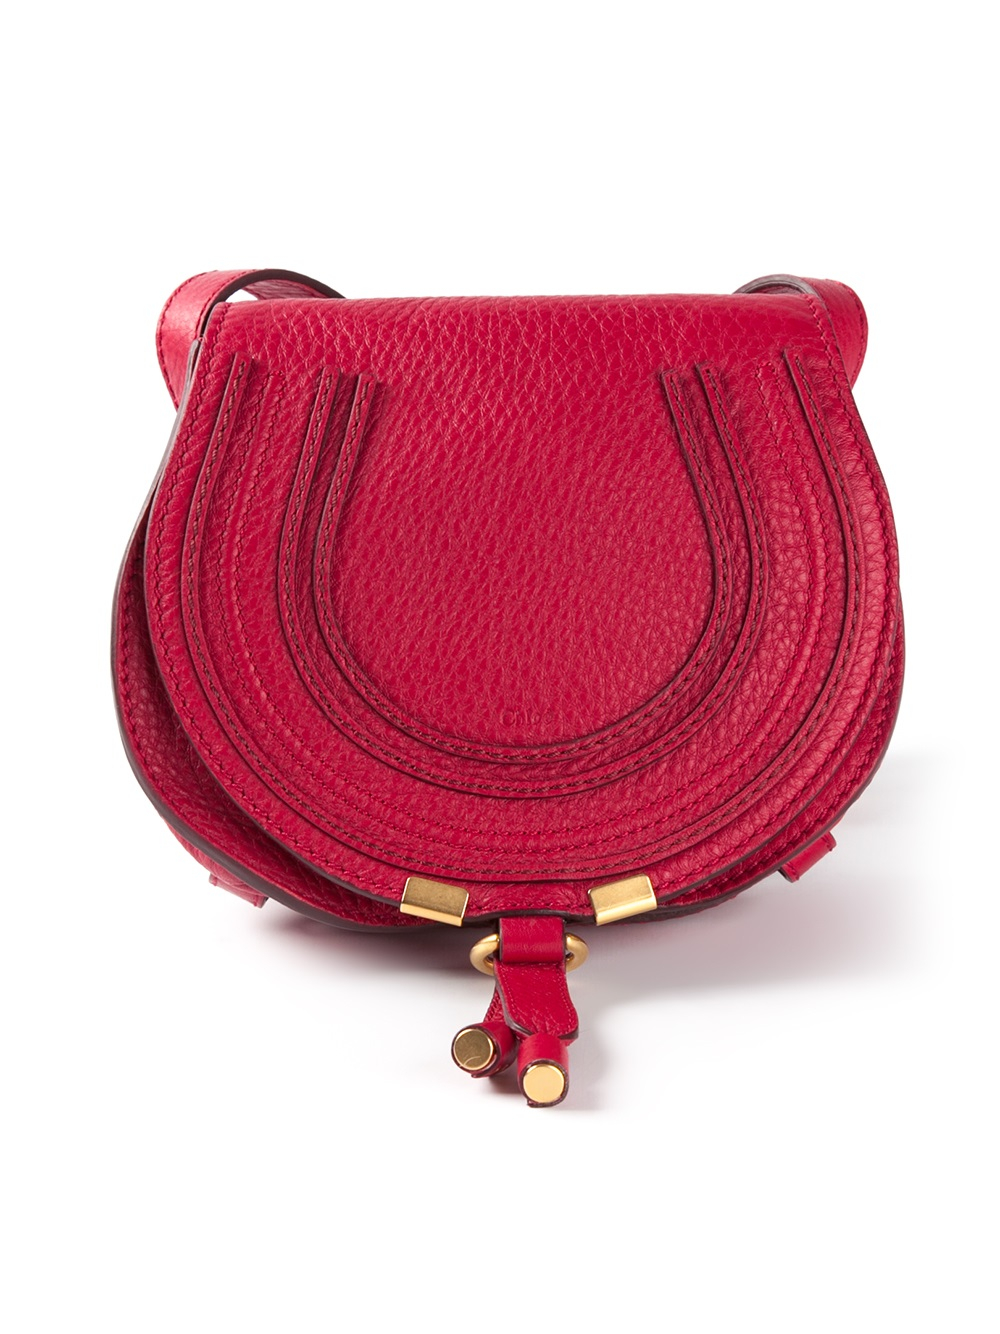 Chloé Marcie Mini Shoulder Bag in Pink & Purple (Red) - Lyst